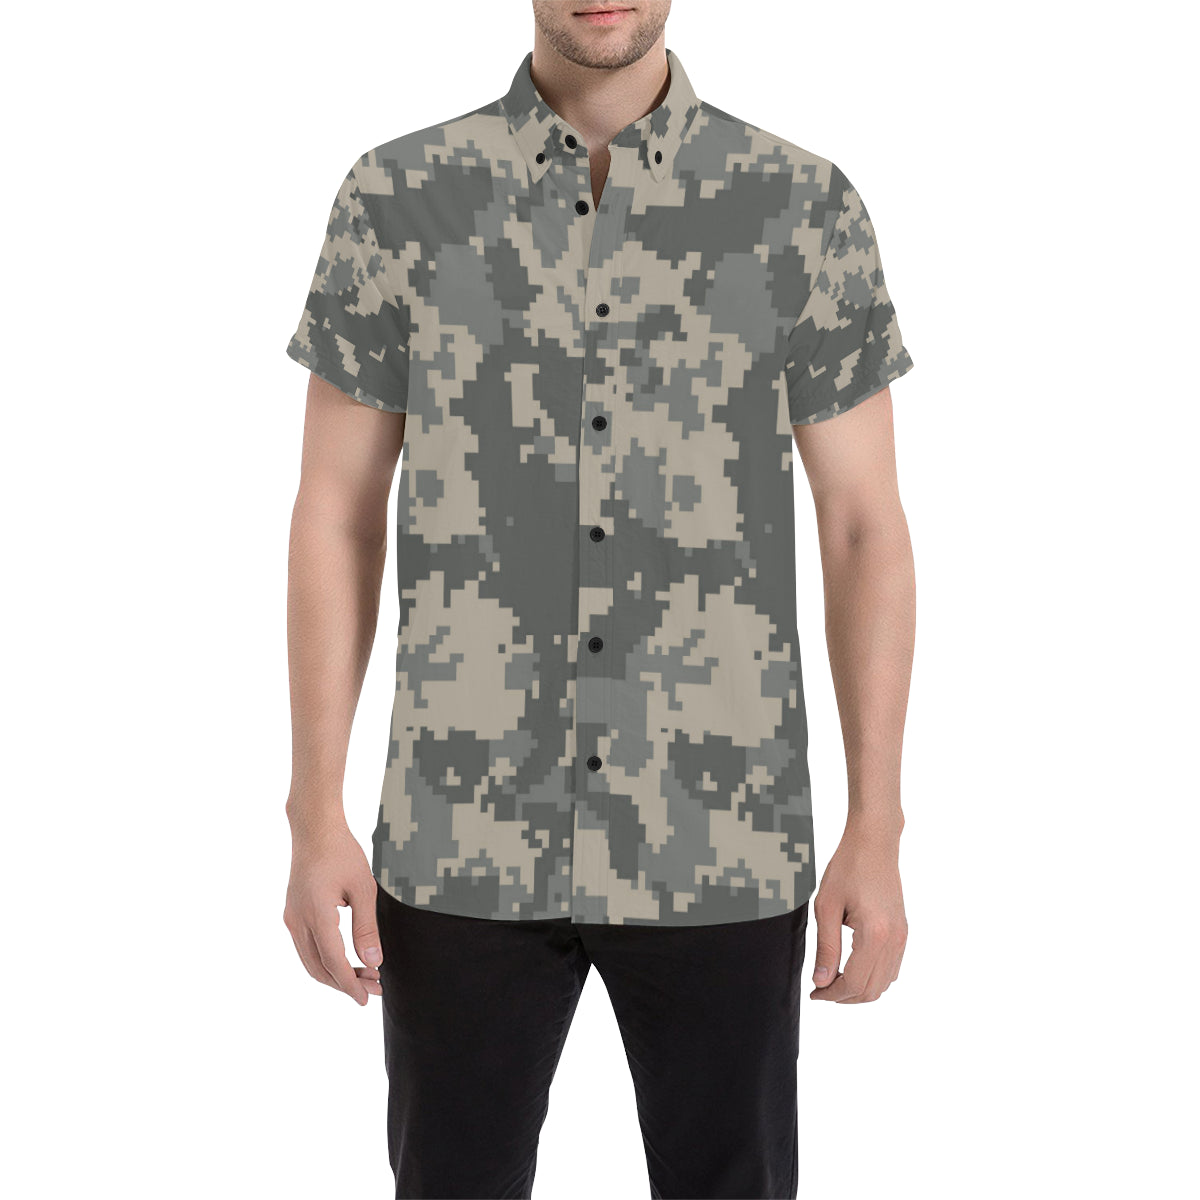 ACU Digital Camouflage Men's Short Sleeve Button Up Shirt